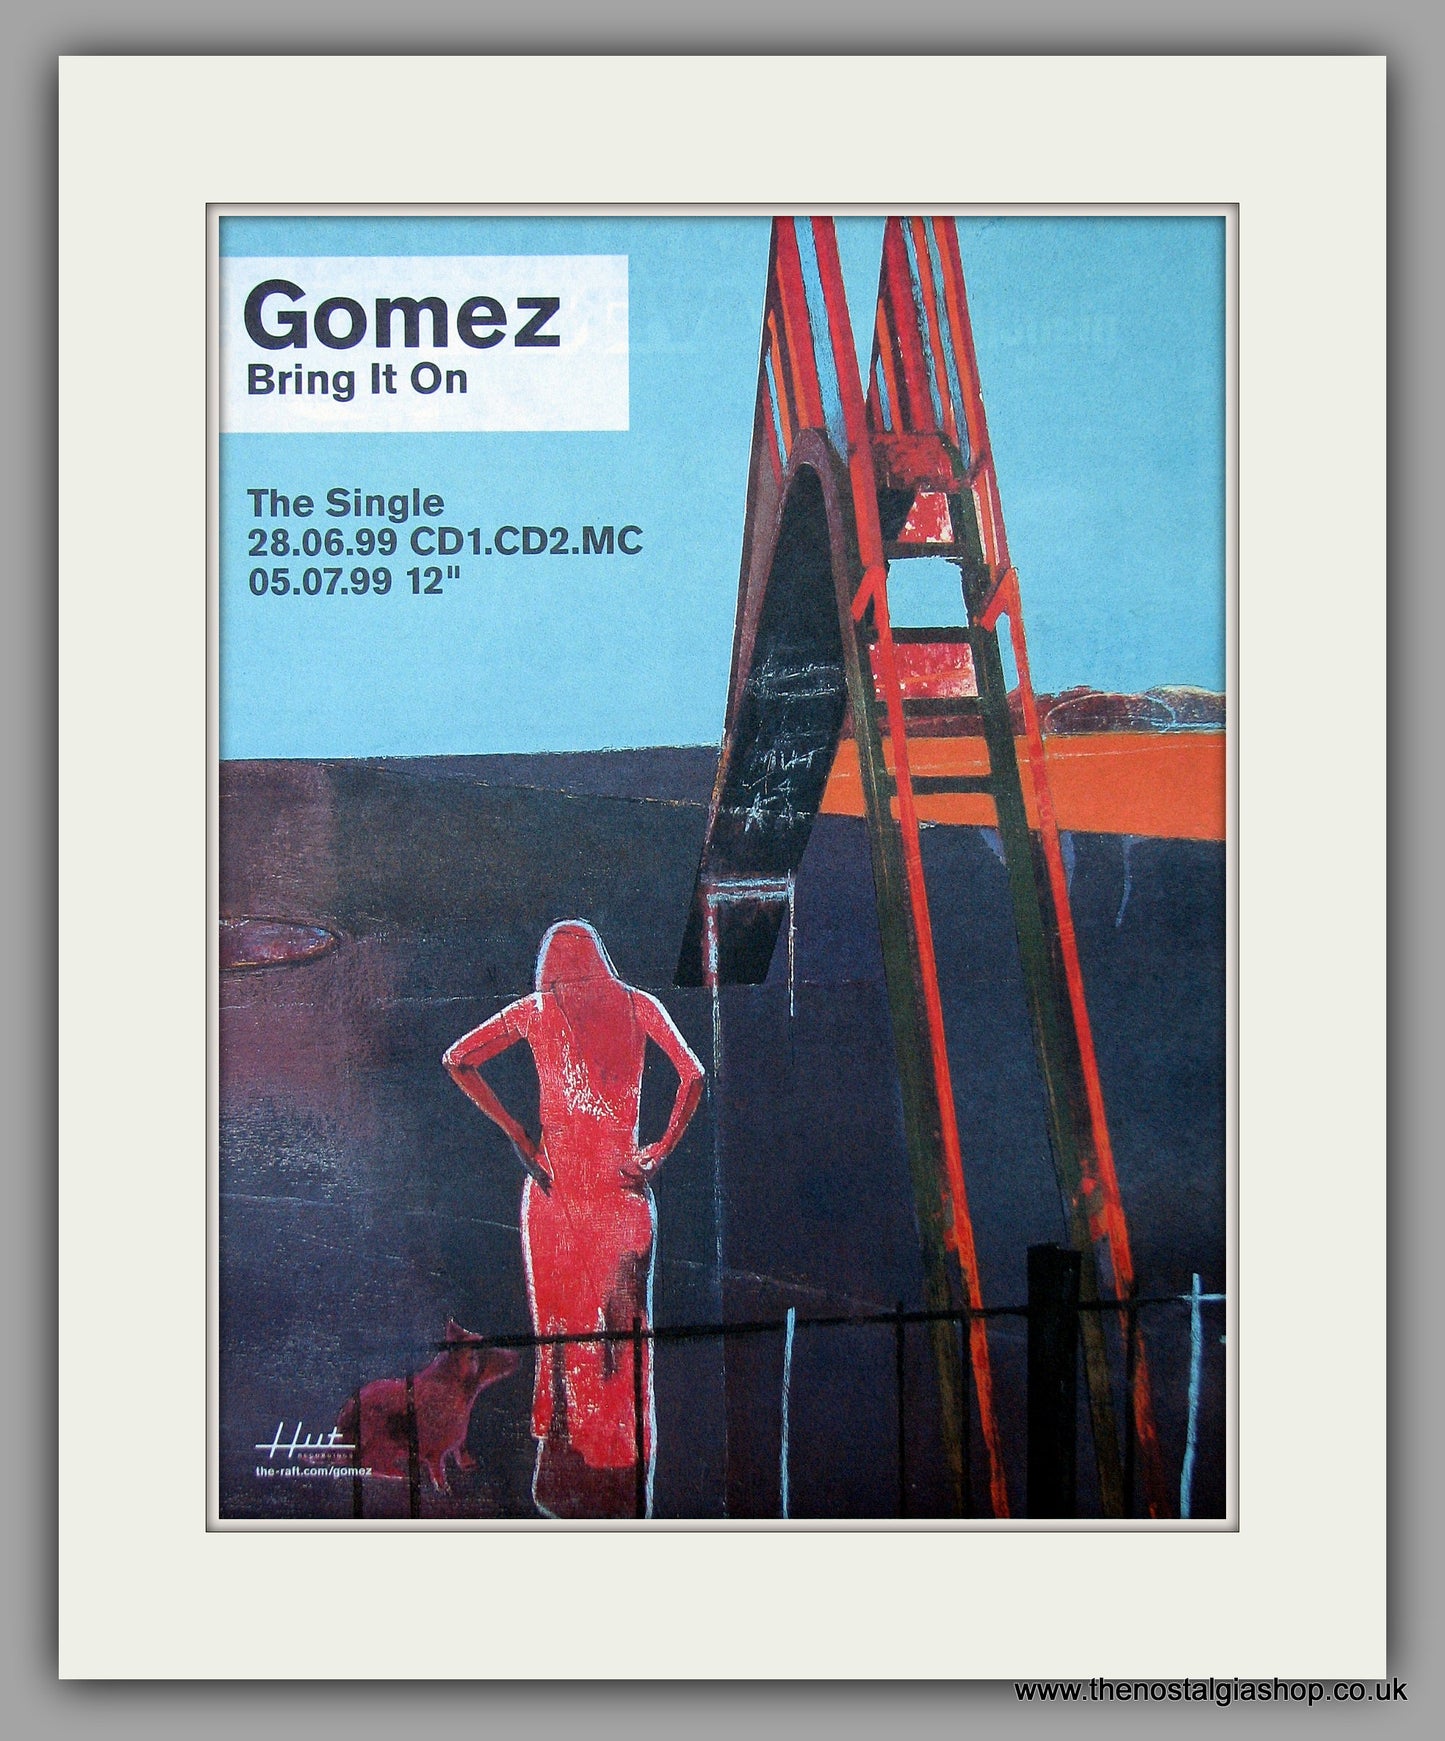 Gomez - Bring It On. Original Vintage Advert 1999 (ref AD10795)